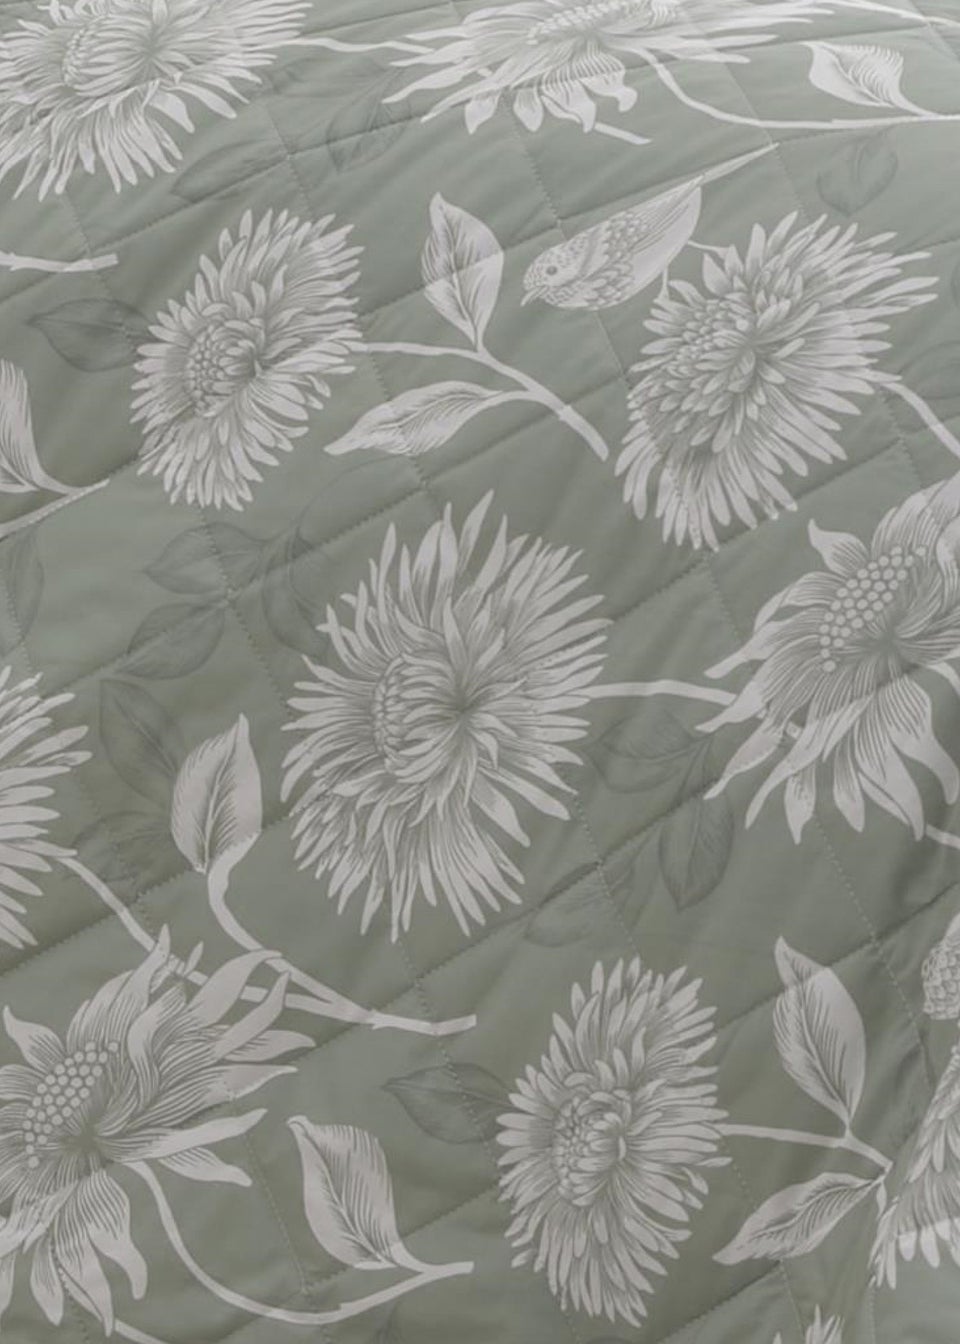 Dreams & Drapes Design Chrysanthemum Bedspread